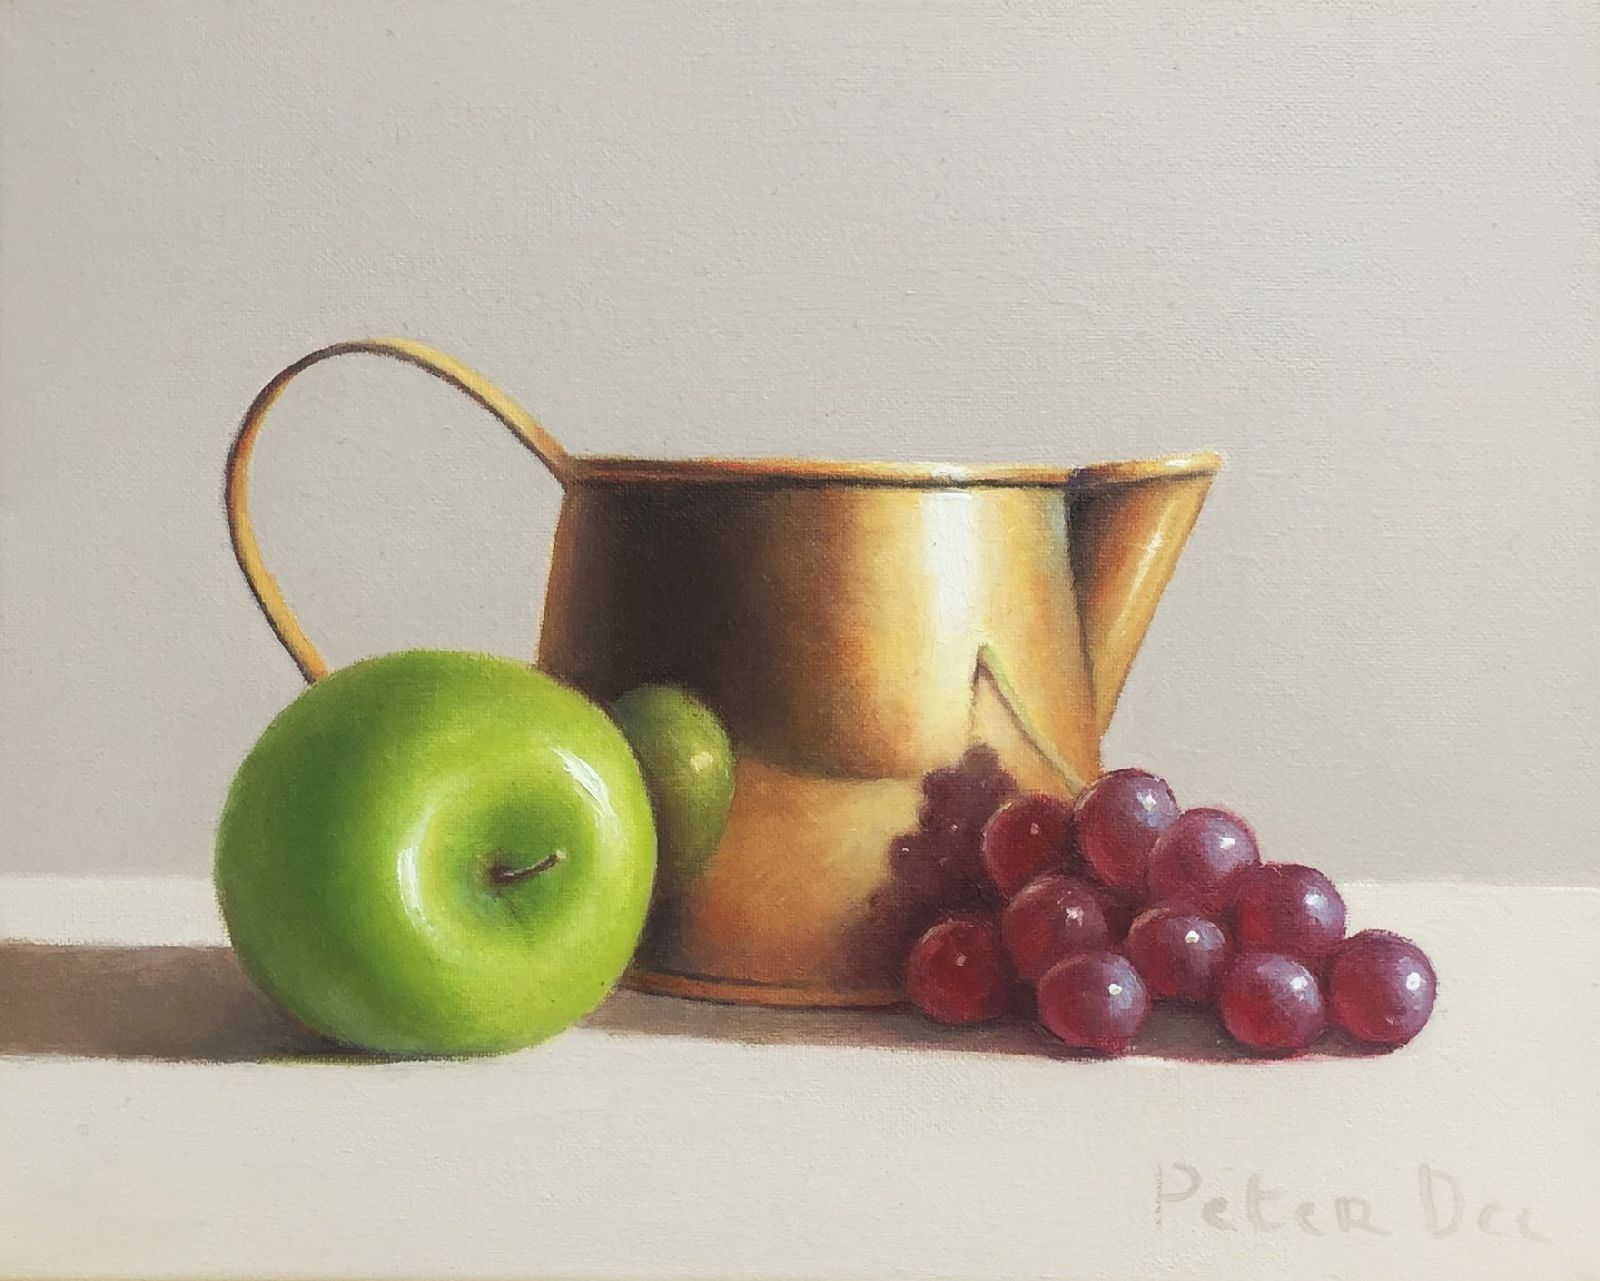 Peter Dee - Brass Jug with Fruit